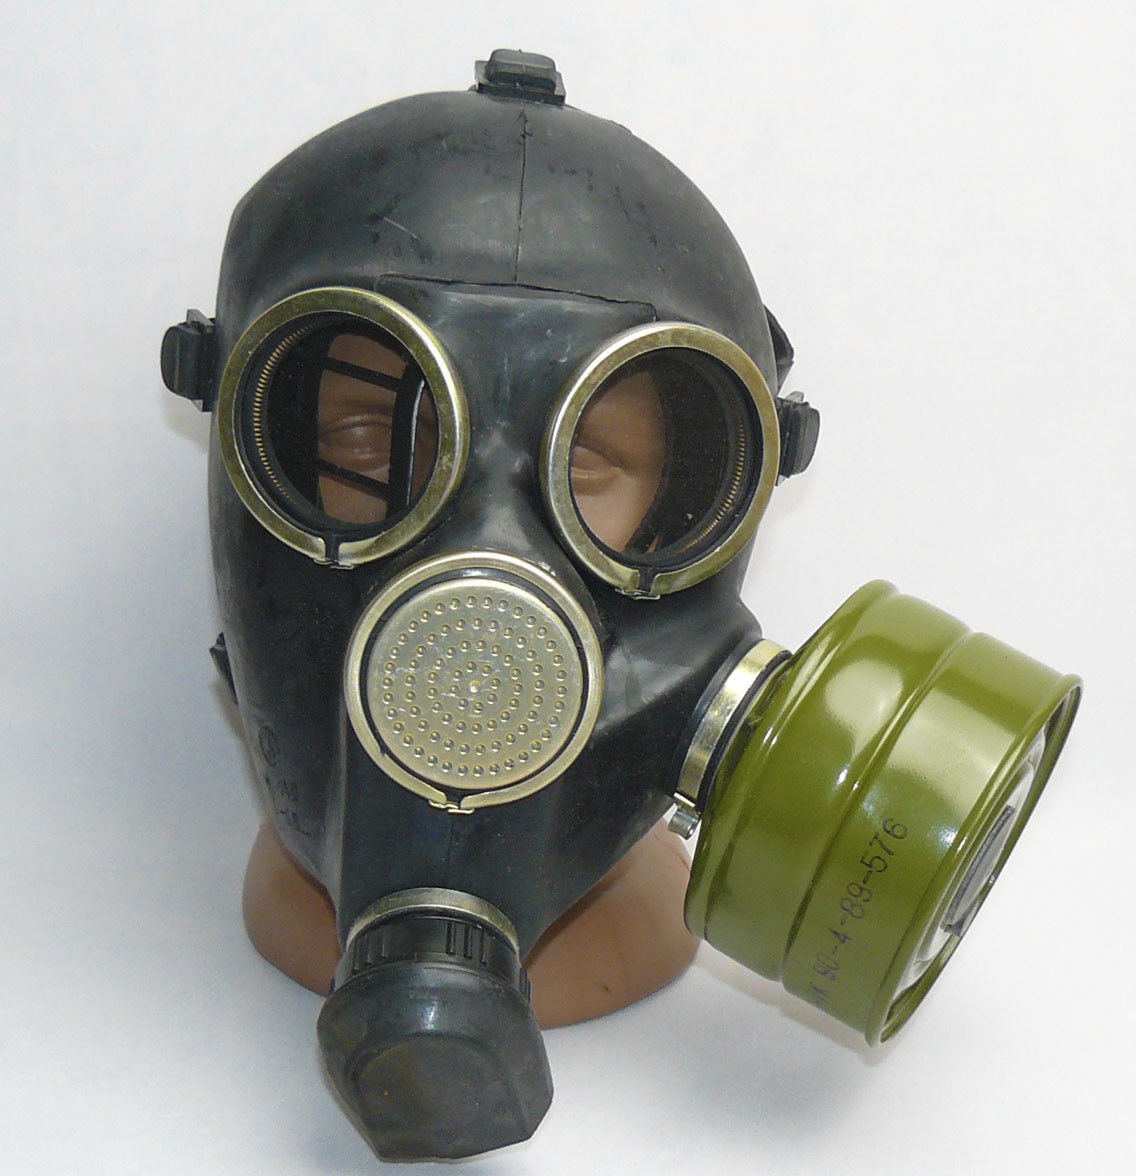 Gp7 Gas Mask